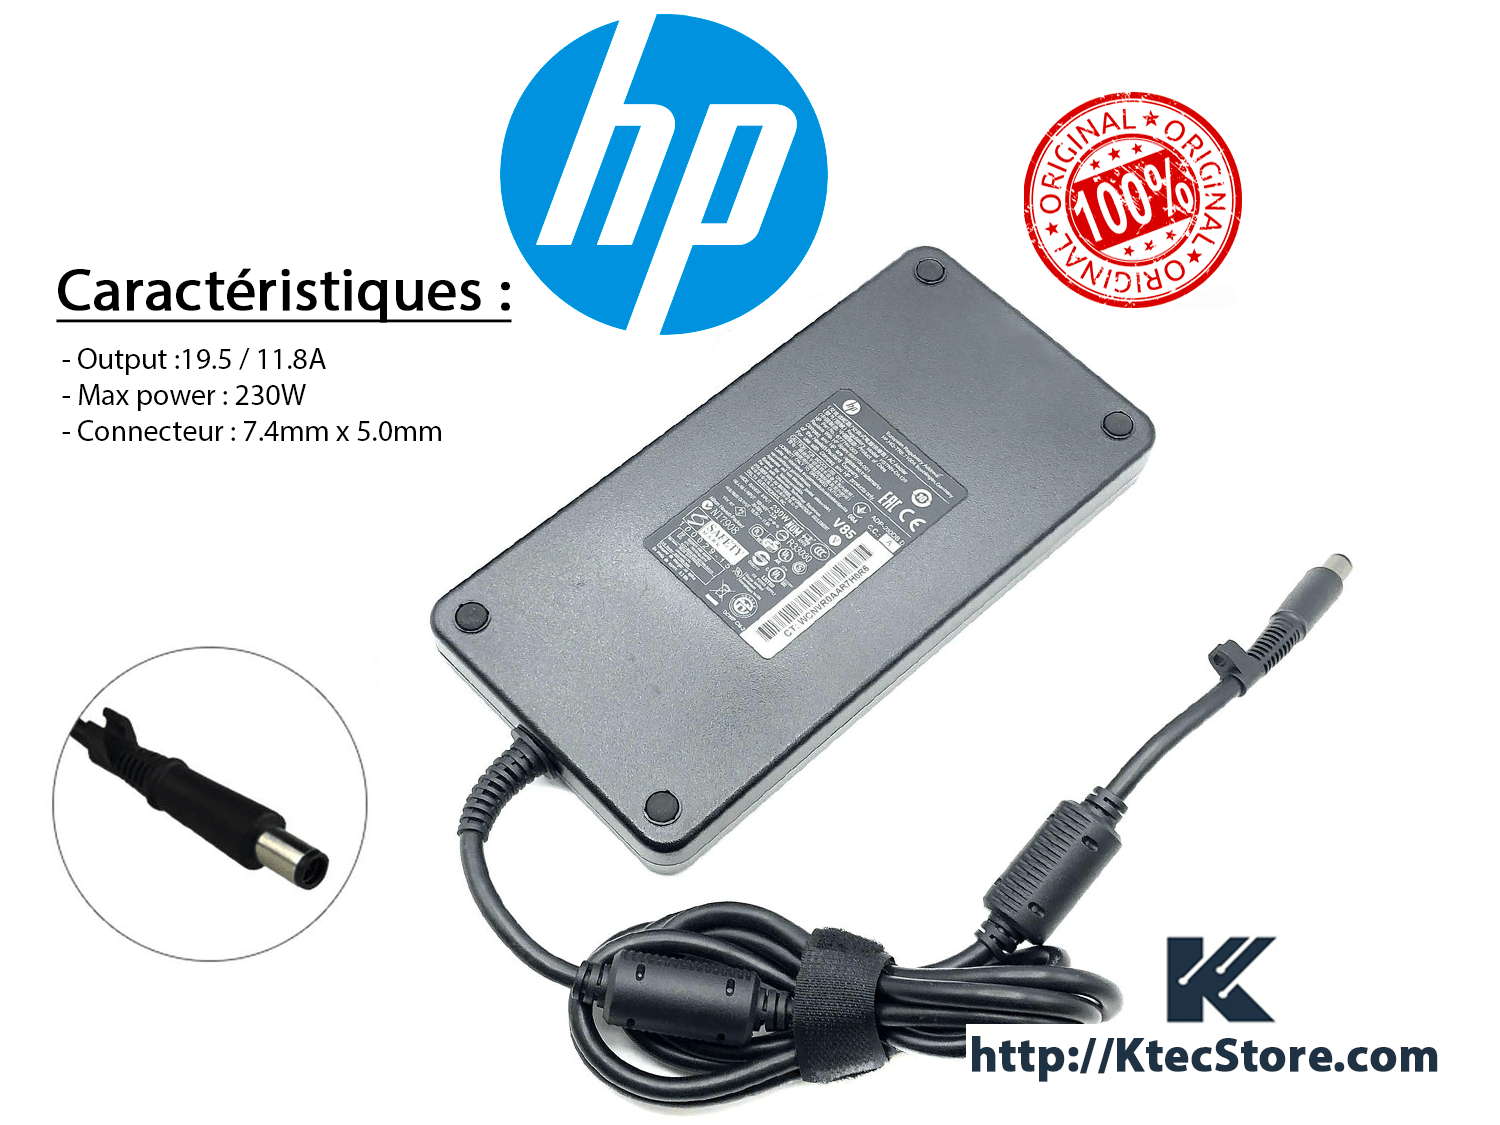 Chargeur HP 150W ORIGINAL 19.5V / 7.7A Fiche Bleu 4.5mm x 3.0mm - KtecStore